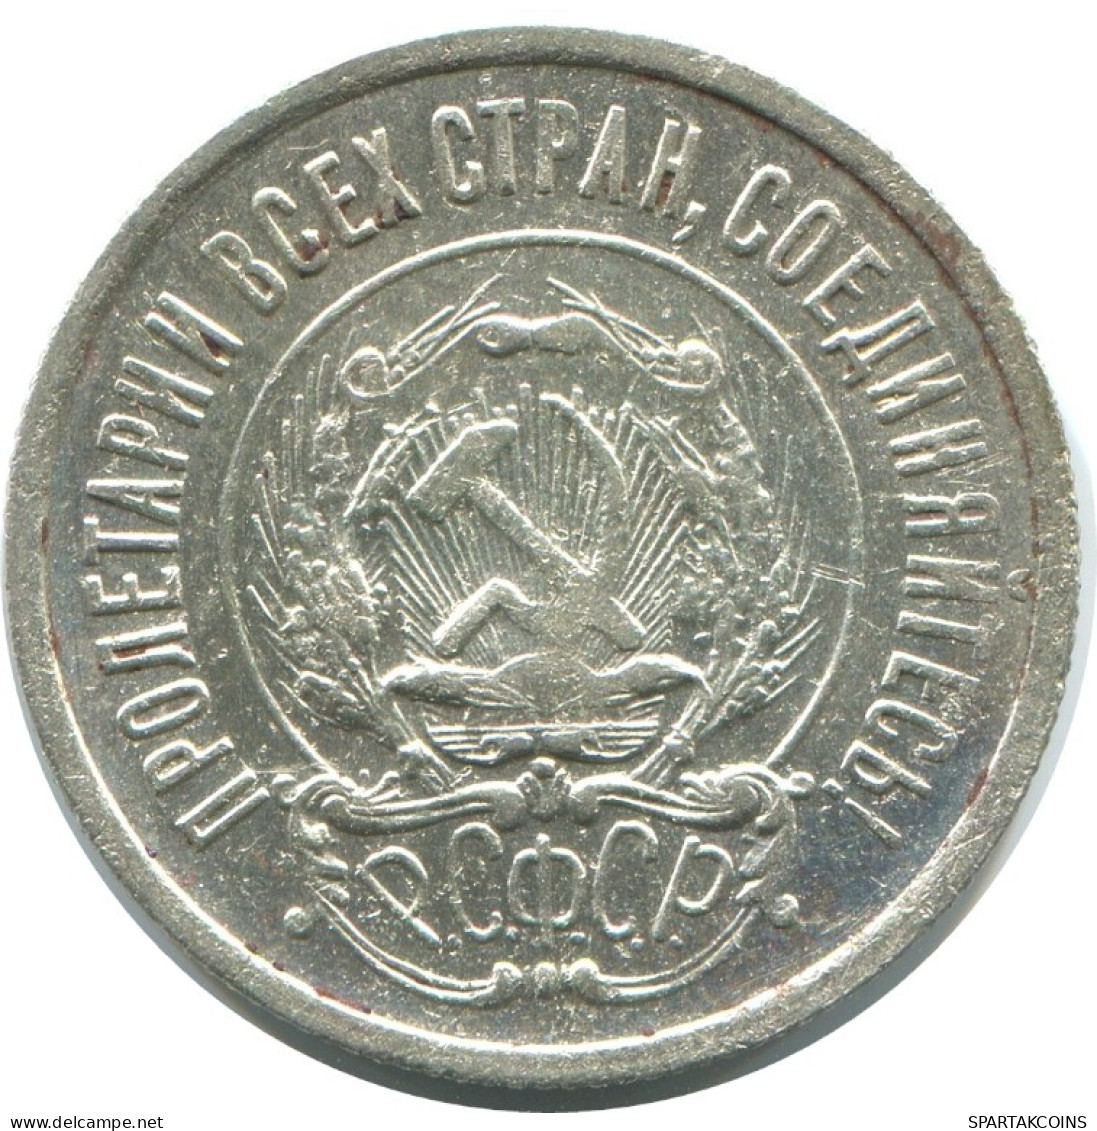 20 KOPEKS 1923 RUSSLAND RUSSIA RSFSR SILBER Münze HIGH GRADE #AF386.4.D.A - Rusland